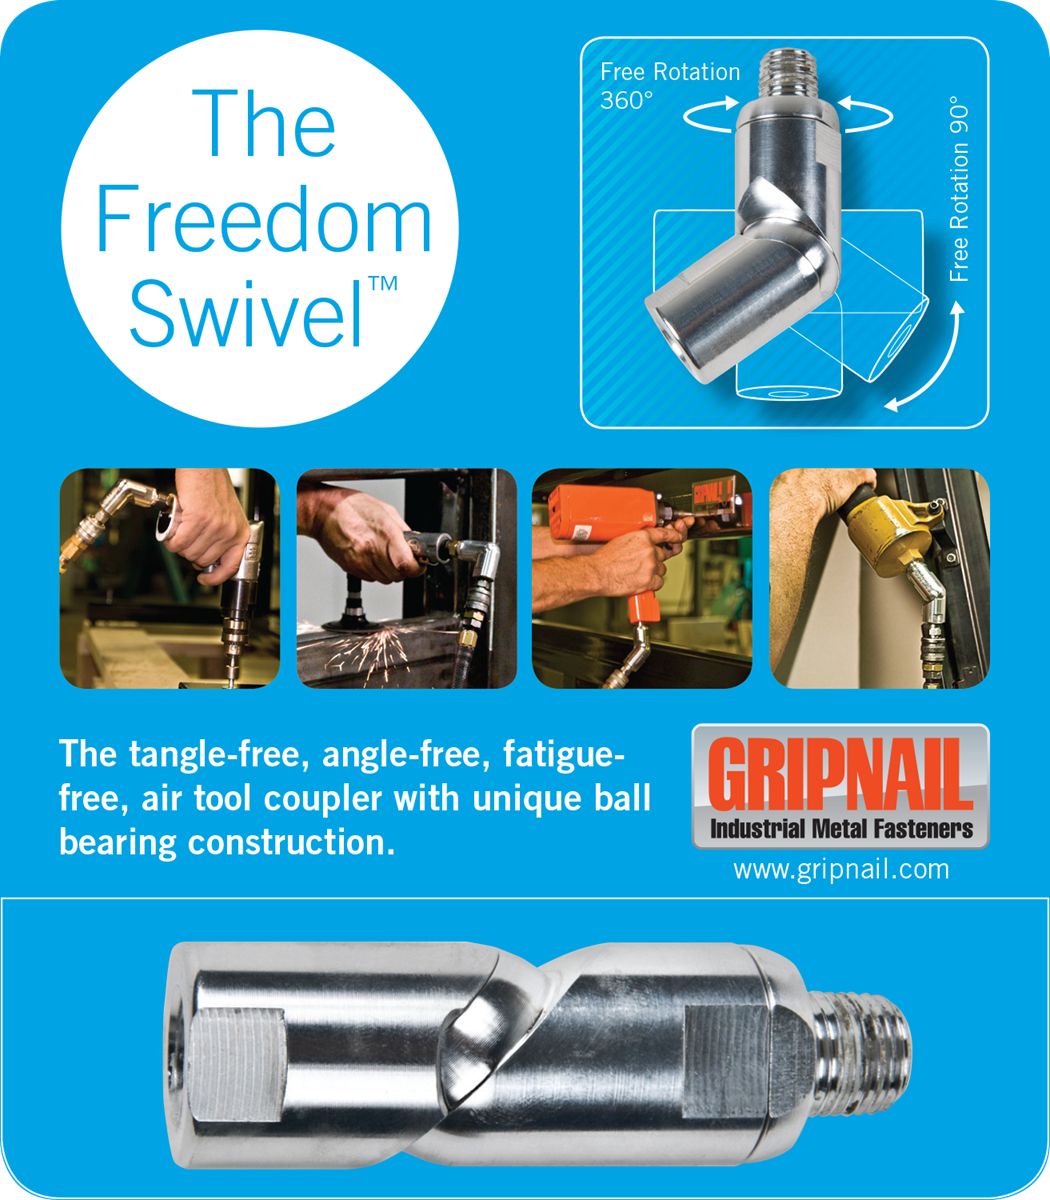 Gripnail - Freedom Swivel